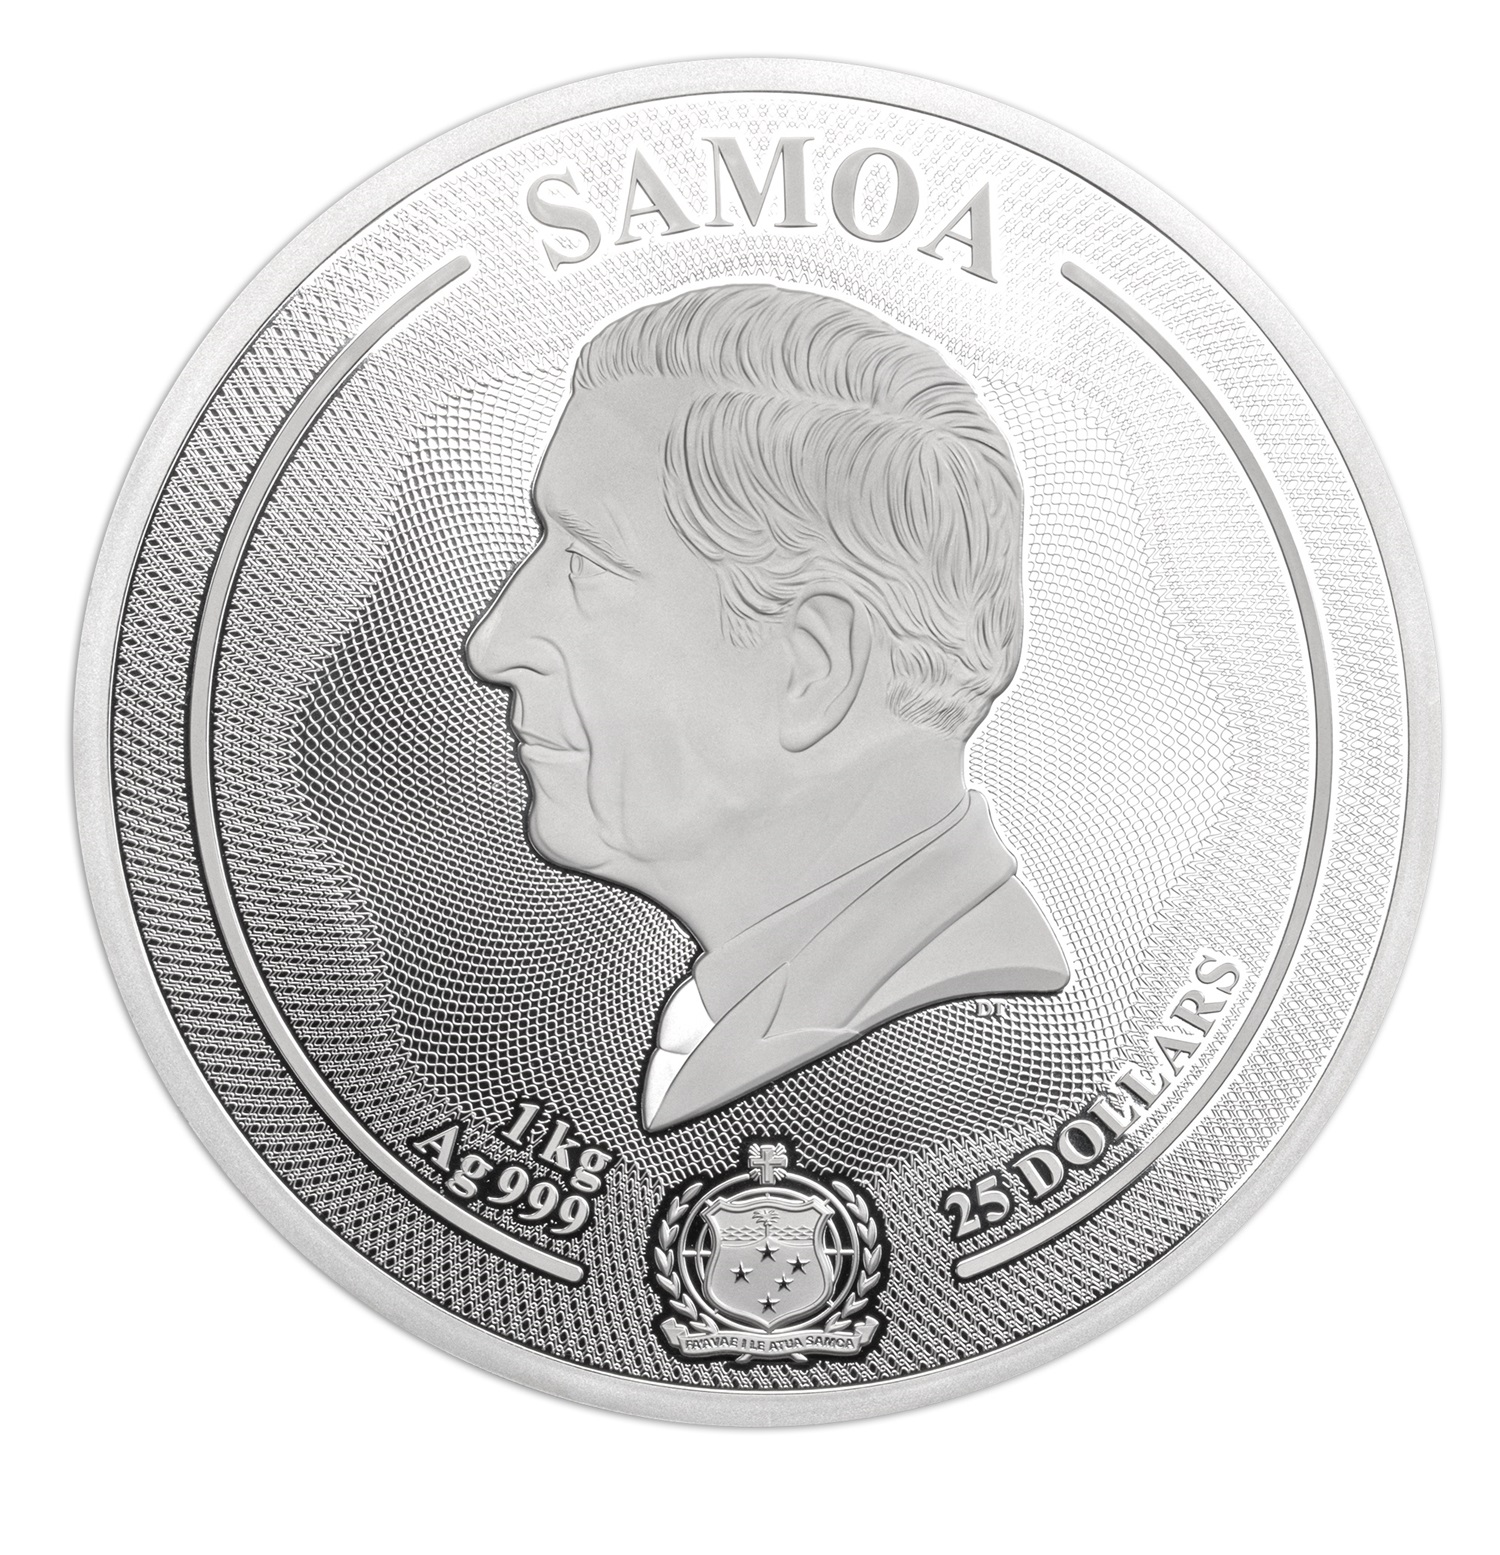 (W193.1.25.D.2024.1.kg.Ag.1550910111) 25 Dollars Samoa 2024 1 kilogram Proof silver - Fox Obverse (zoom)